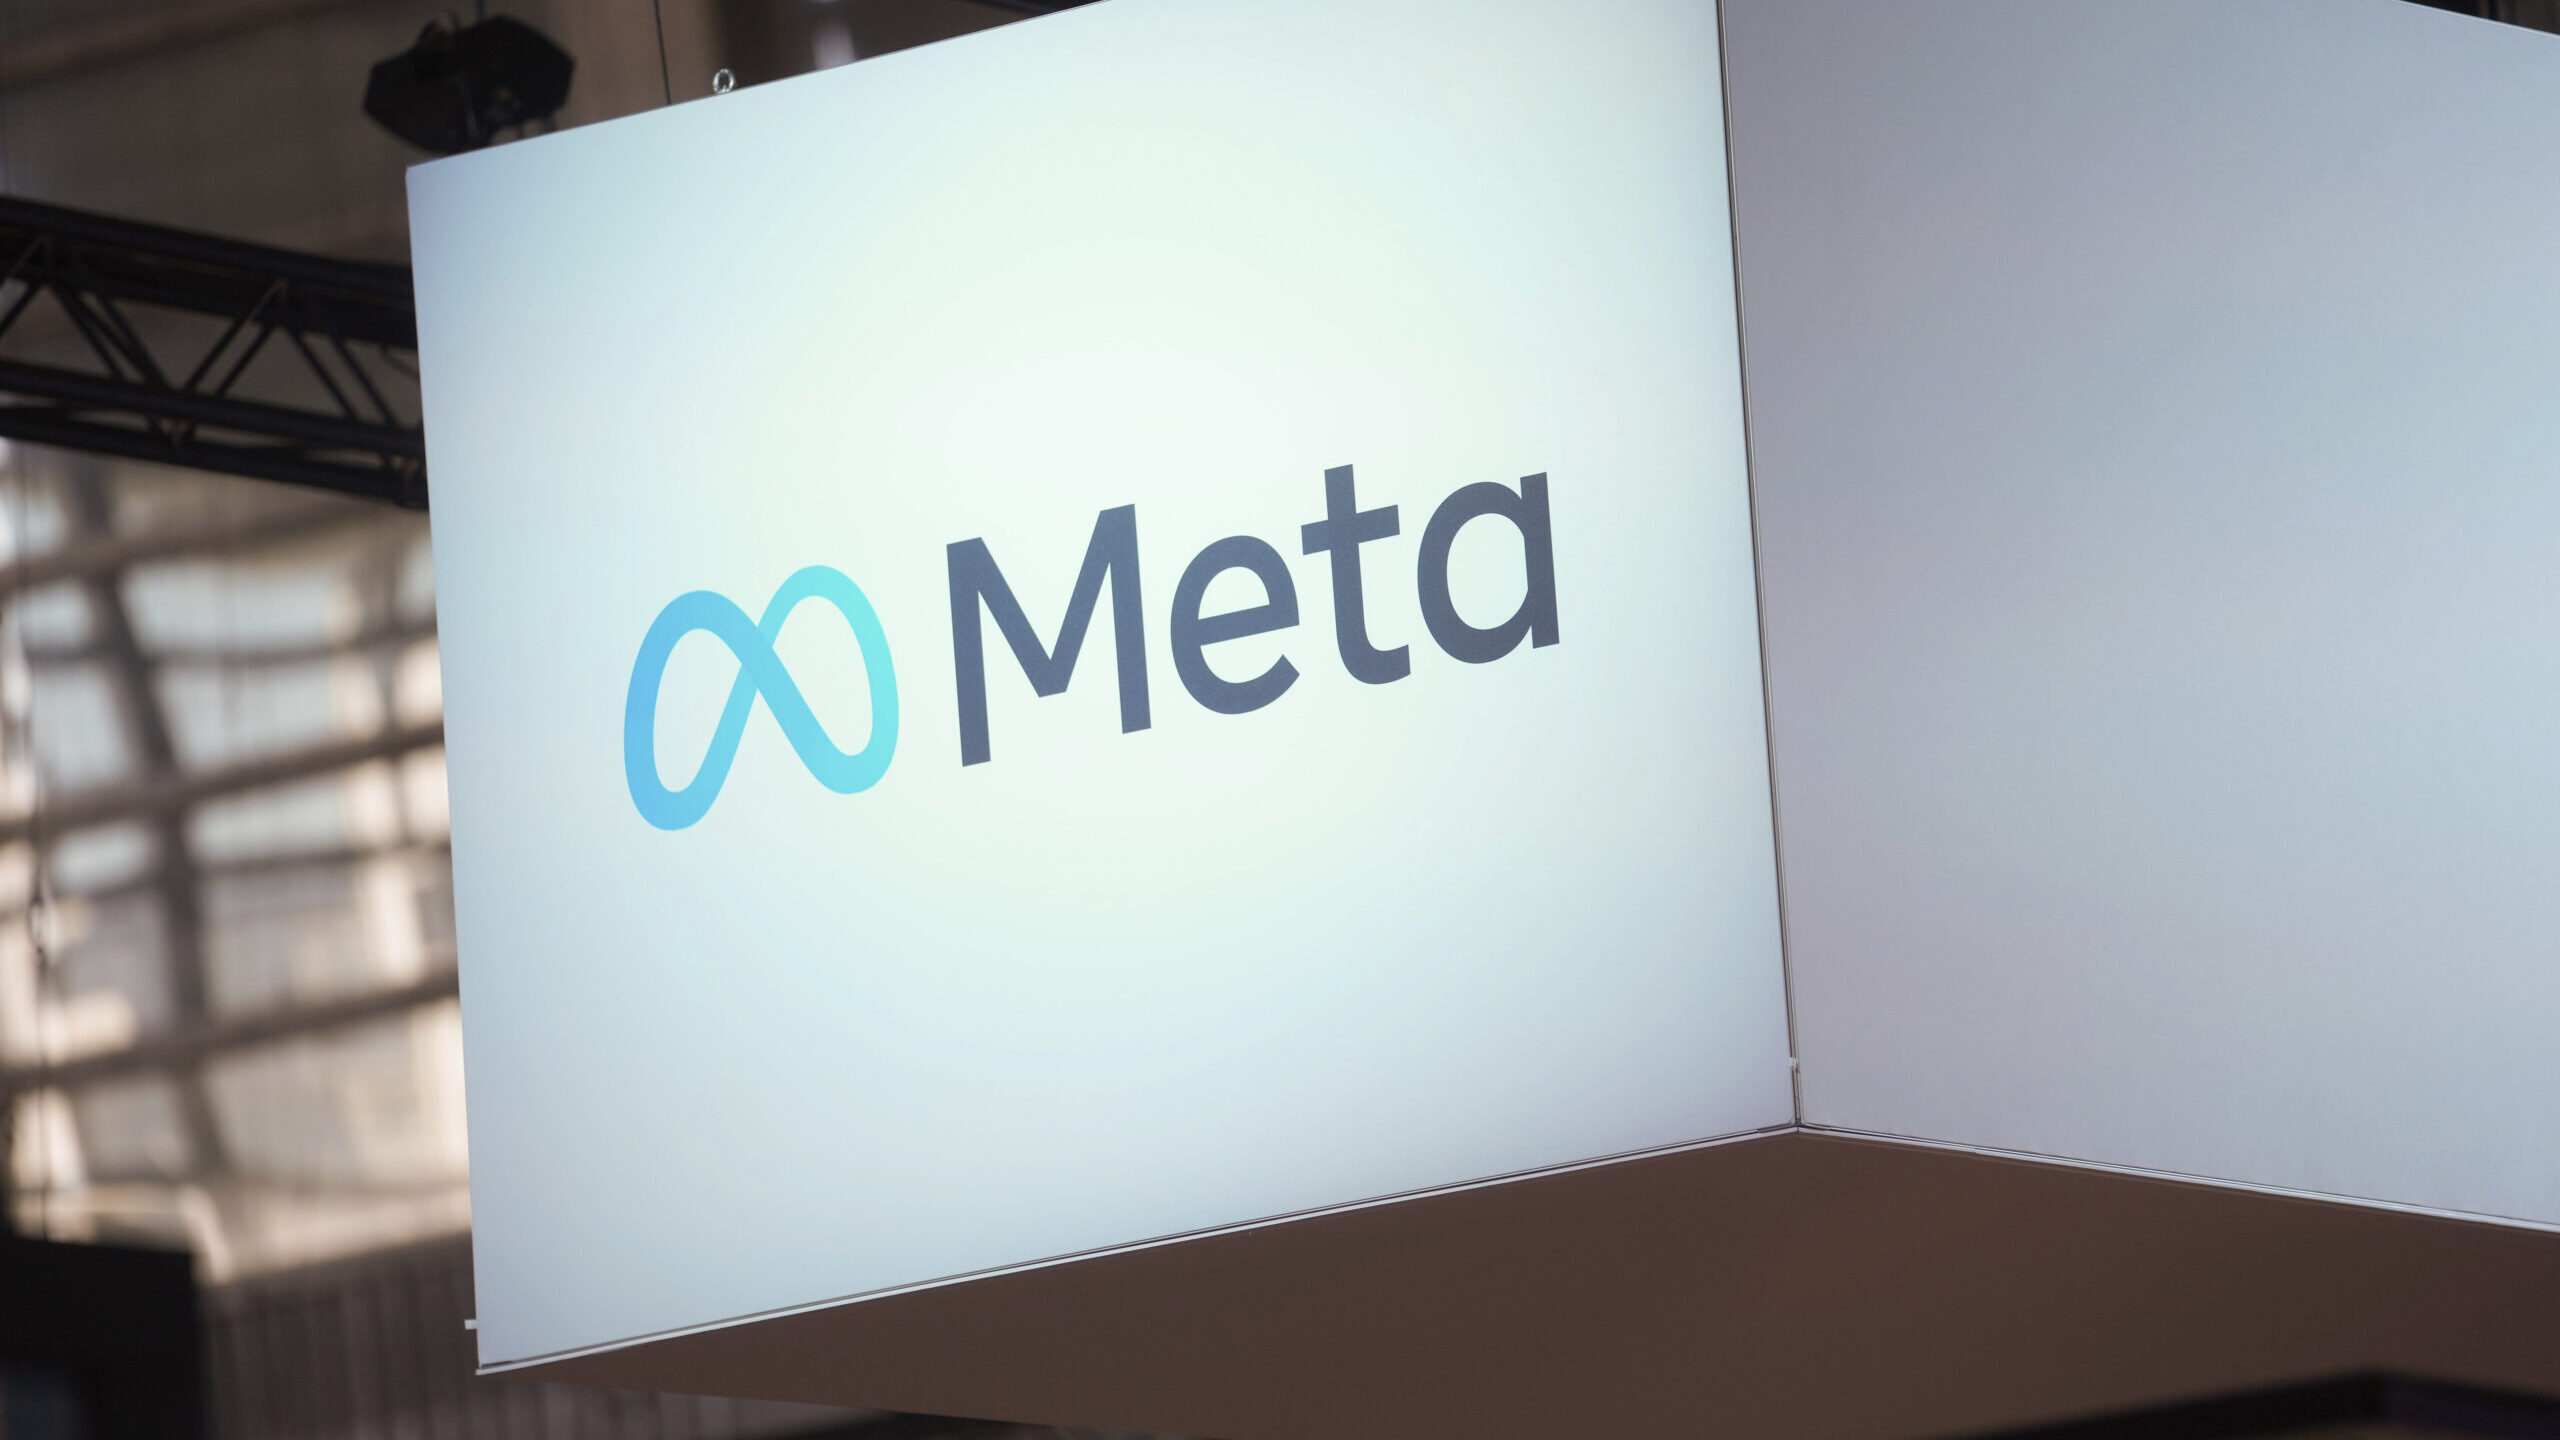 a sign reads "meta"...